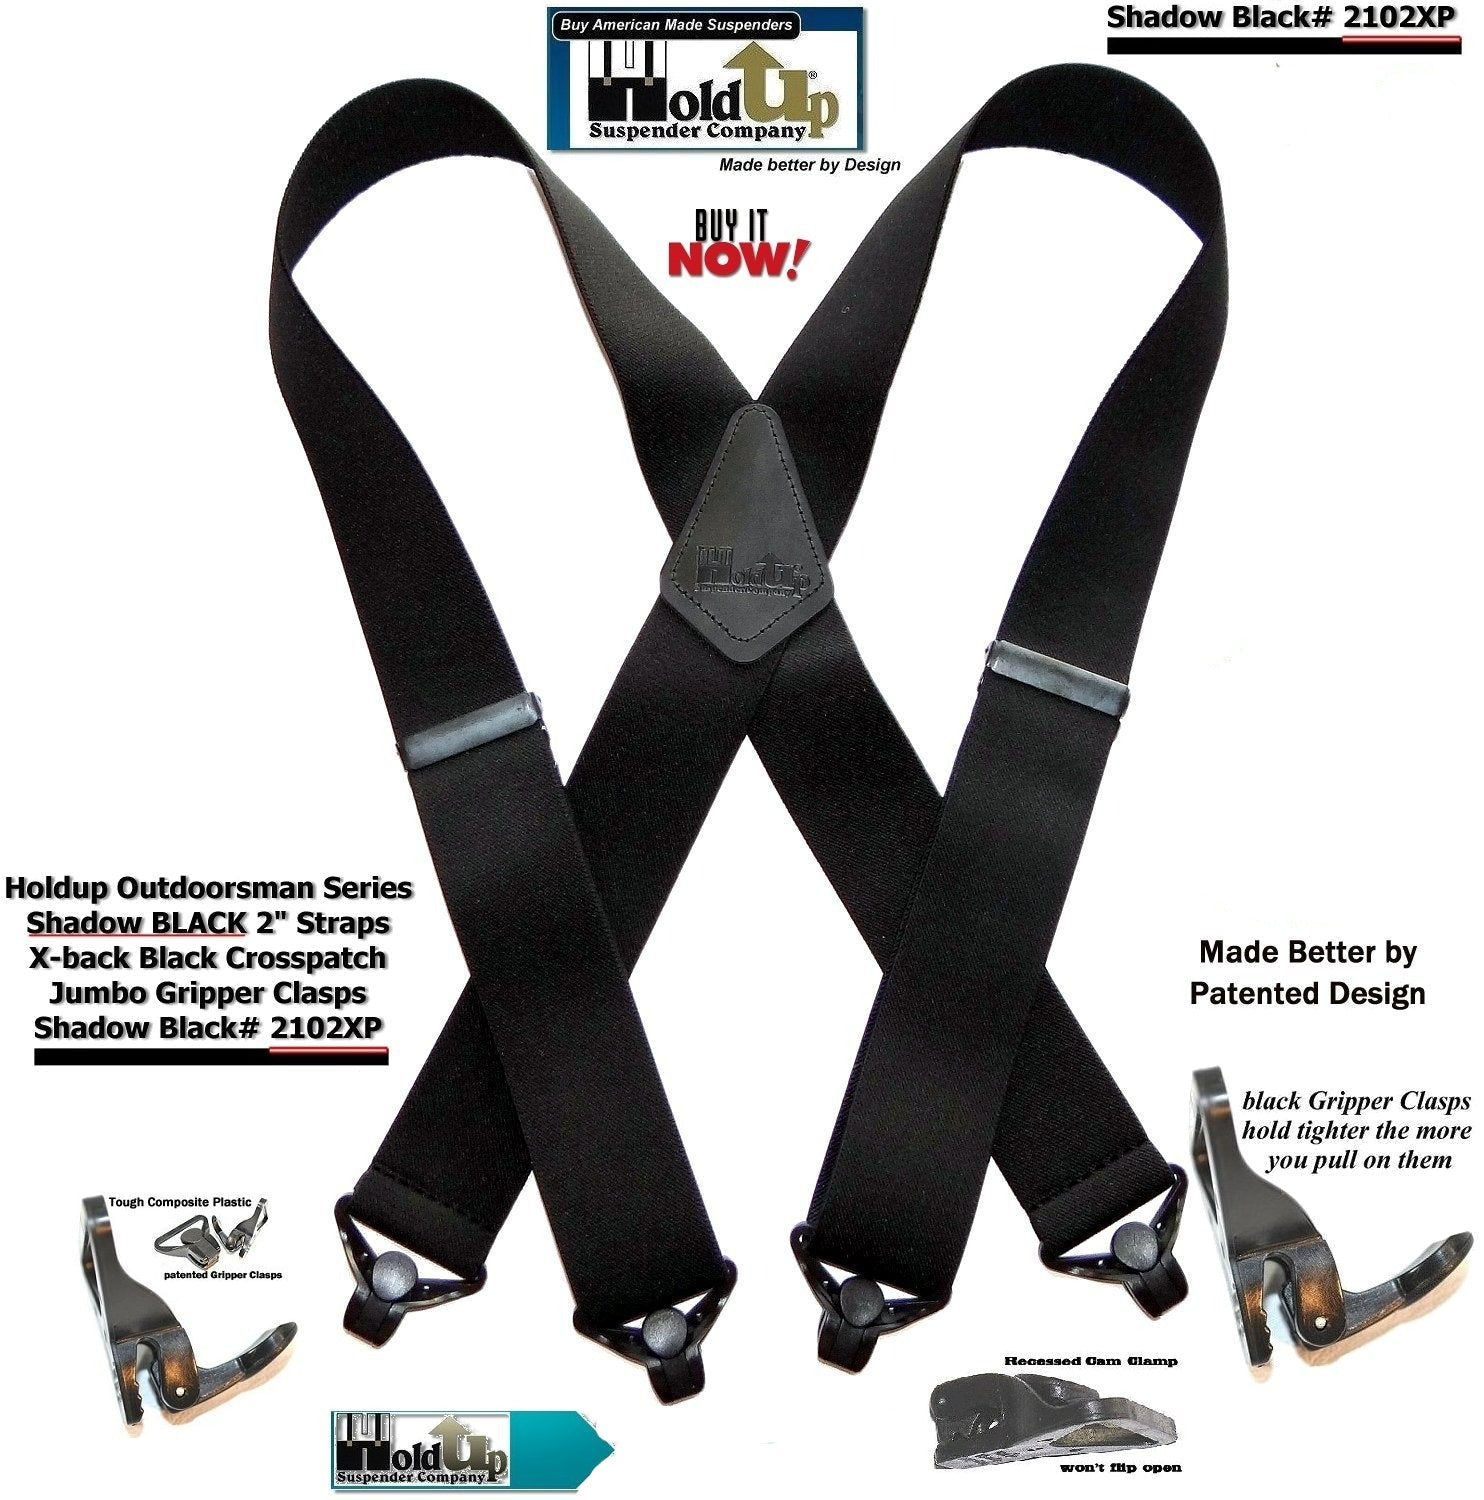 MENDENG Black Suspenders for Men Heavy Duty Clips X Back